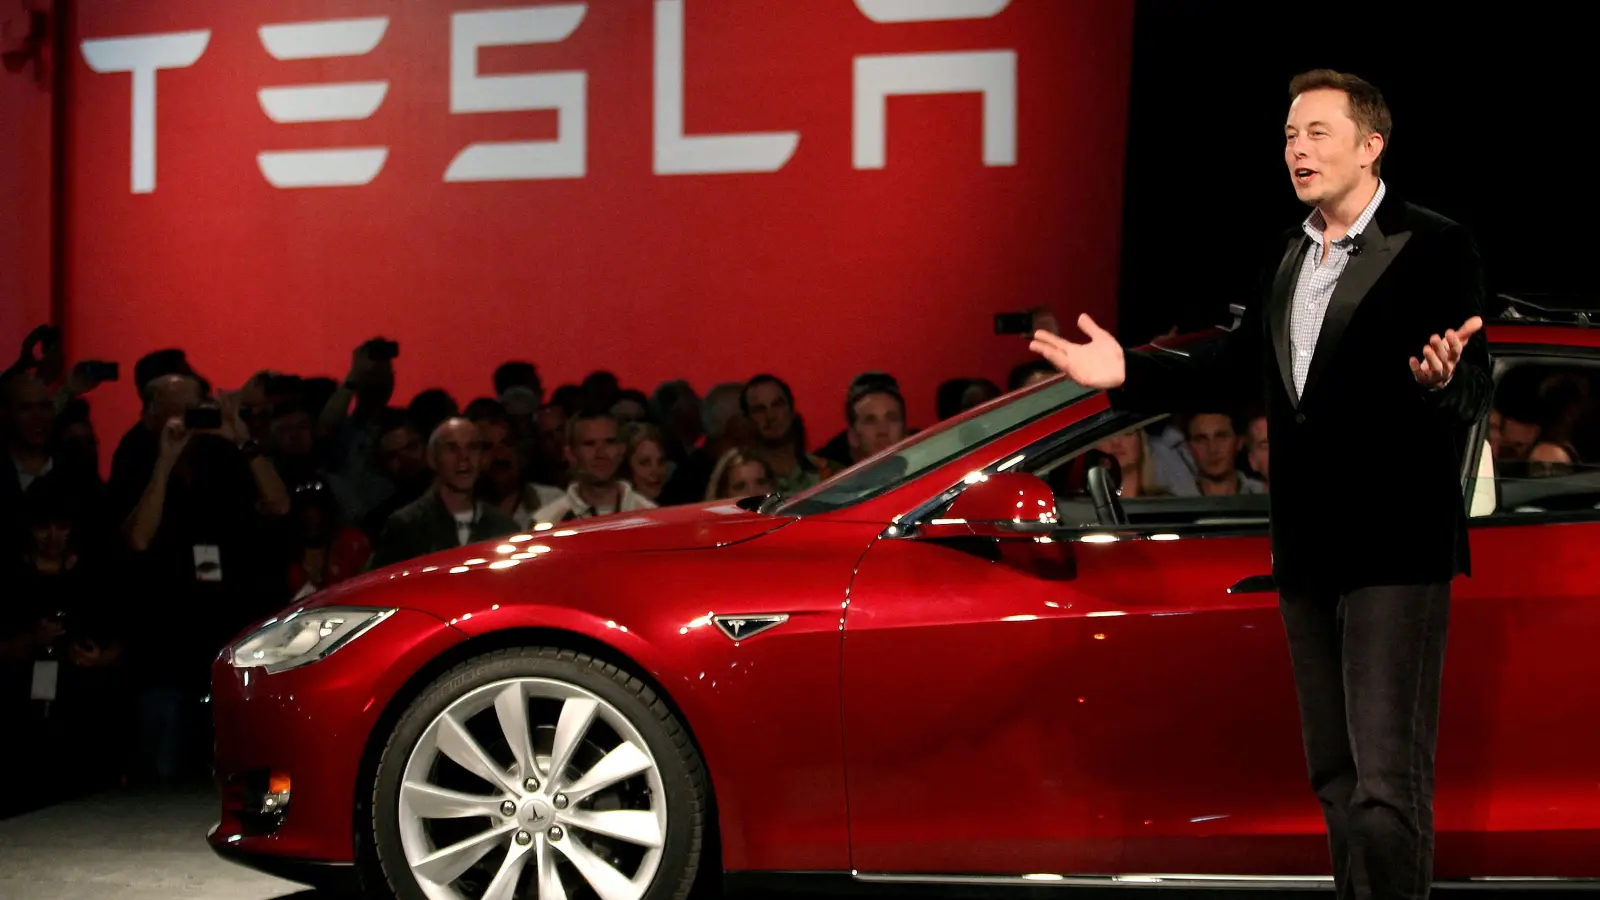 Tesla recalls 40,000 vehicles over power steering issue